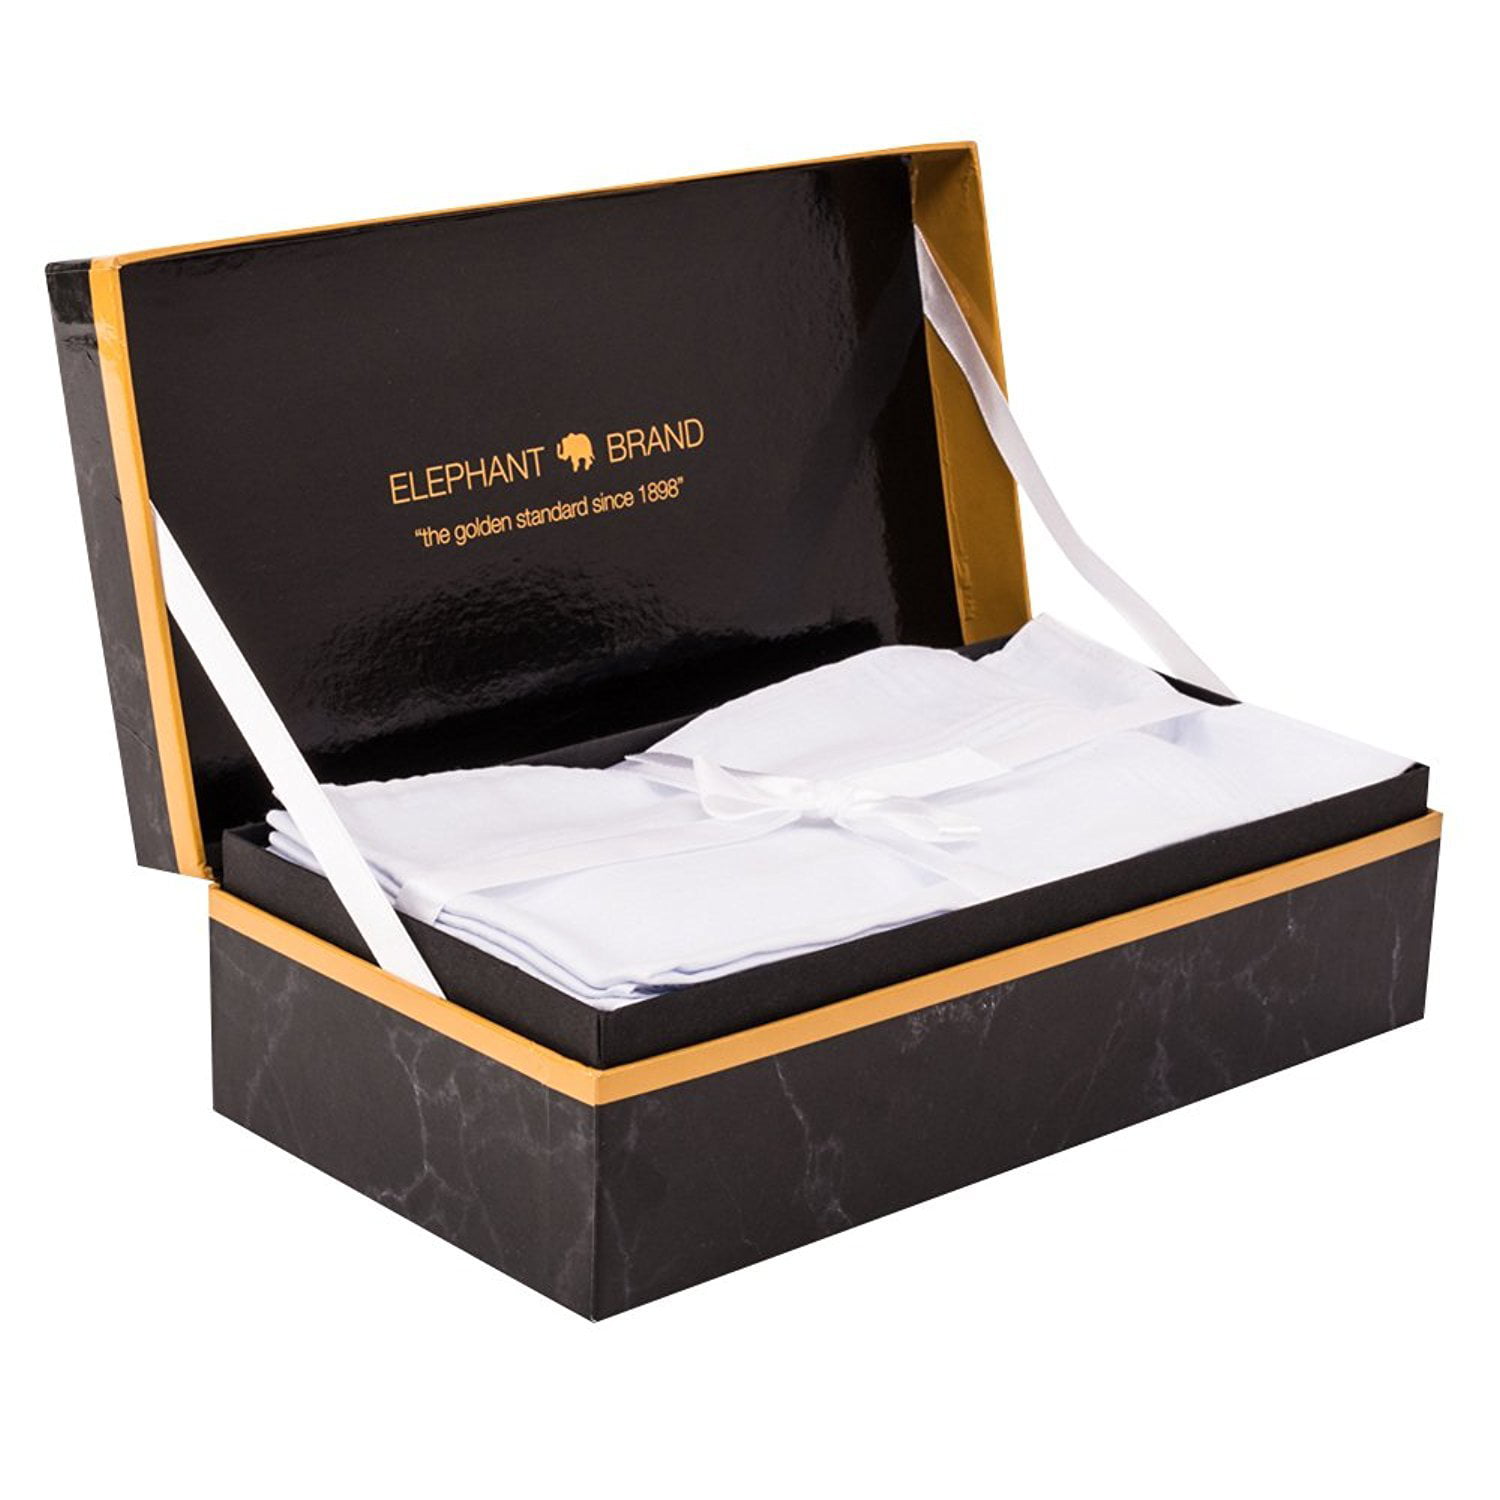 Unisex/Male/Female Handkerchiefs Hankies Hanky 100% PURE COTTON Giftable Box Unique/Christmas Gift/Wedding Gift.